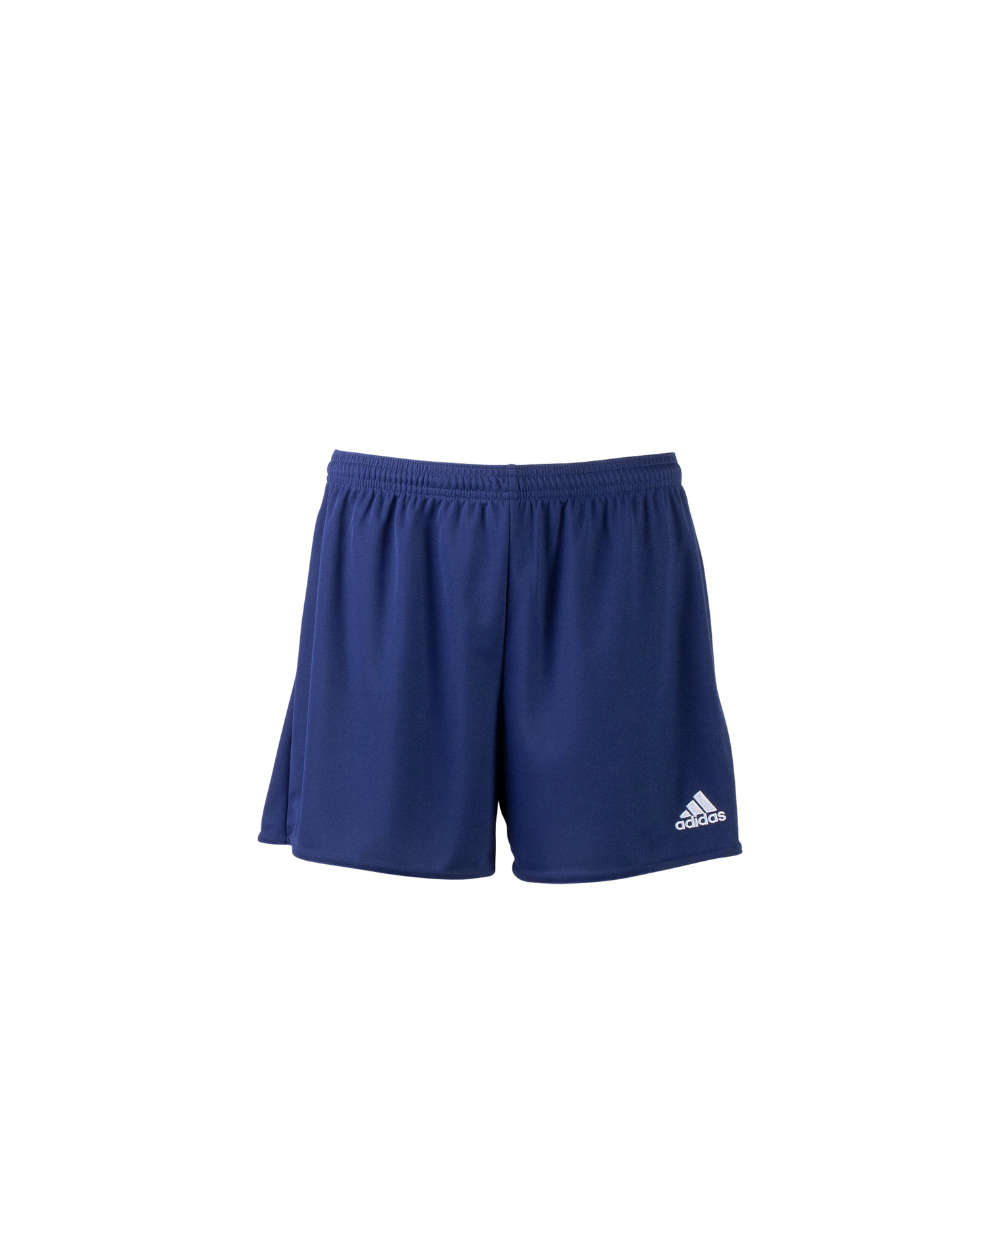 France Adidas Navy Game Shorts — Elite Soccer League